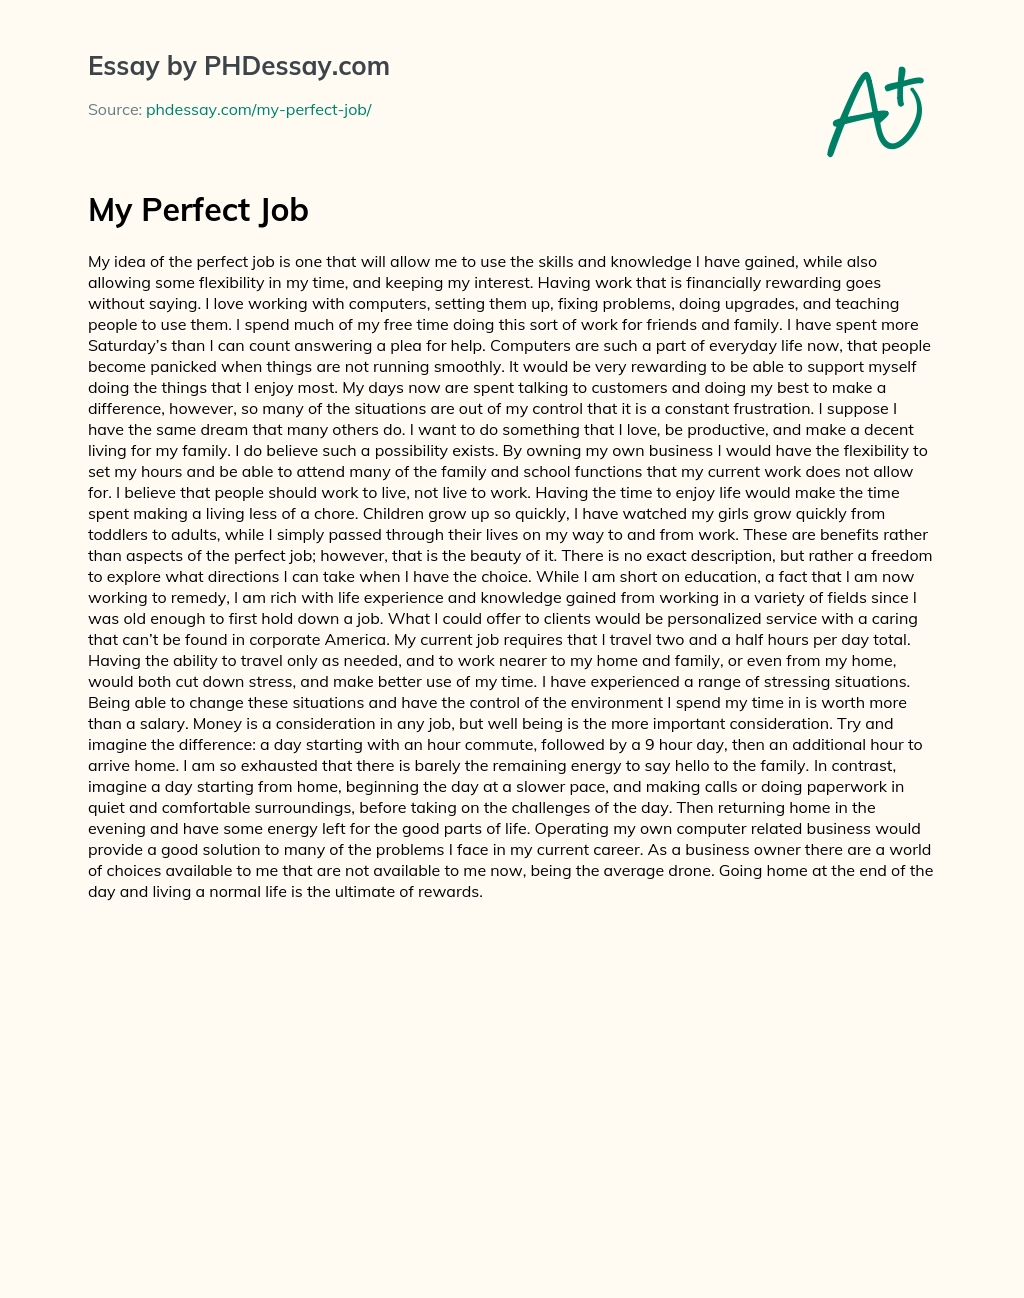 My Perfect Job essay